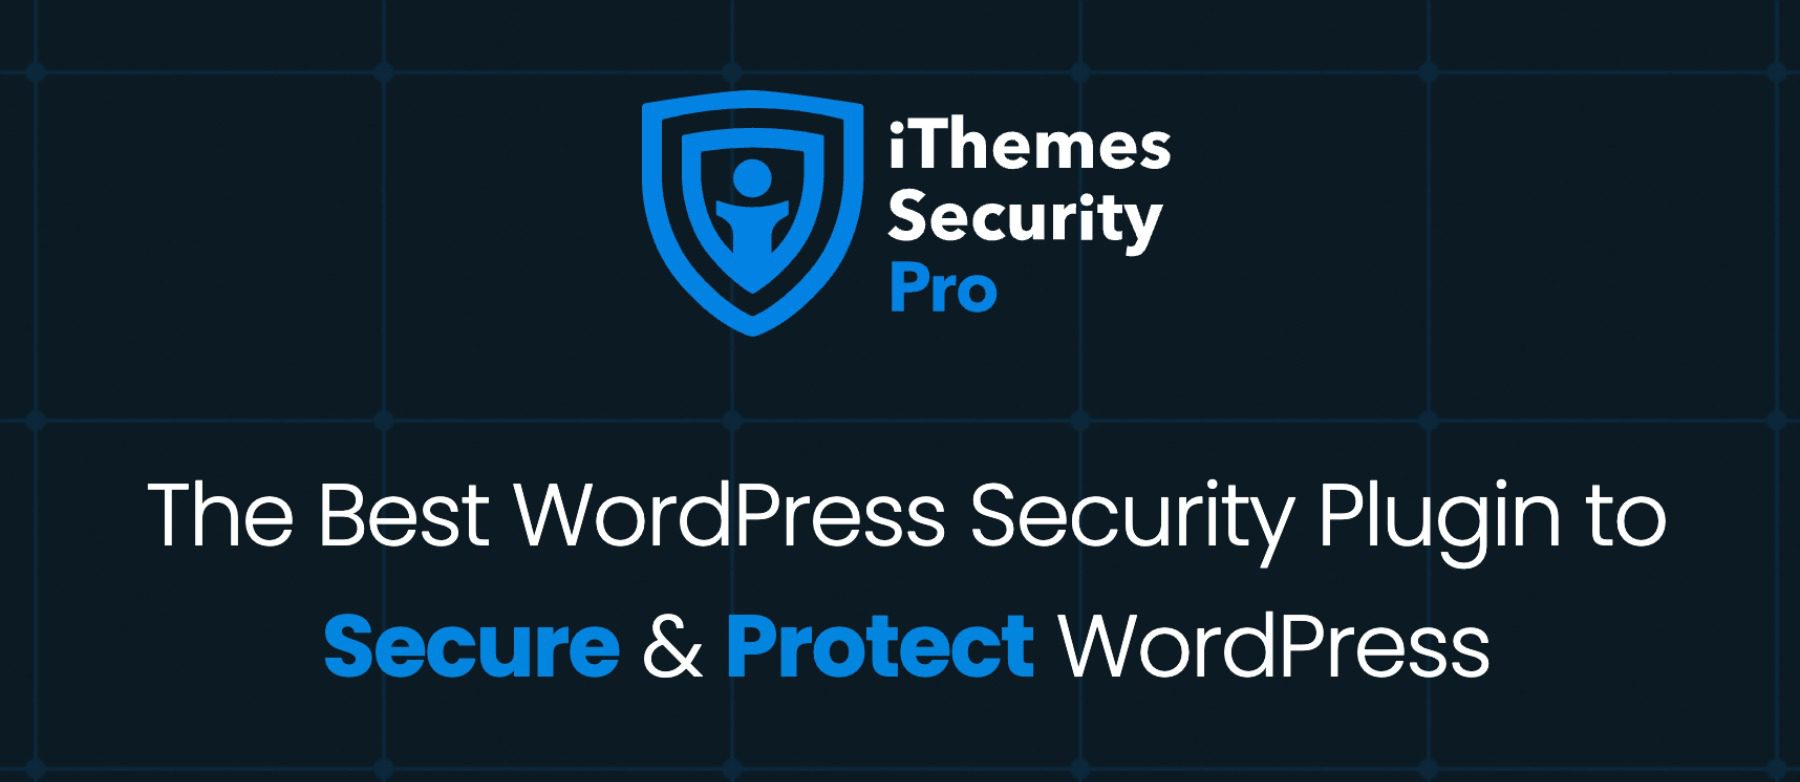 The iThemes WordPress security plugin.